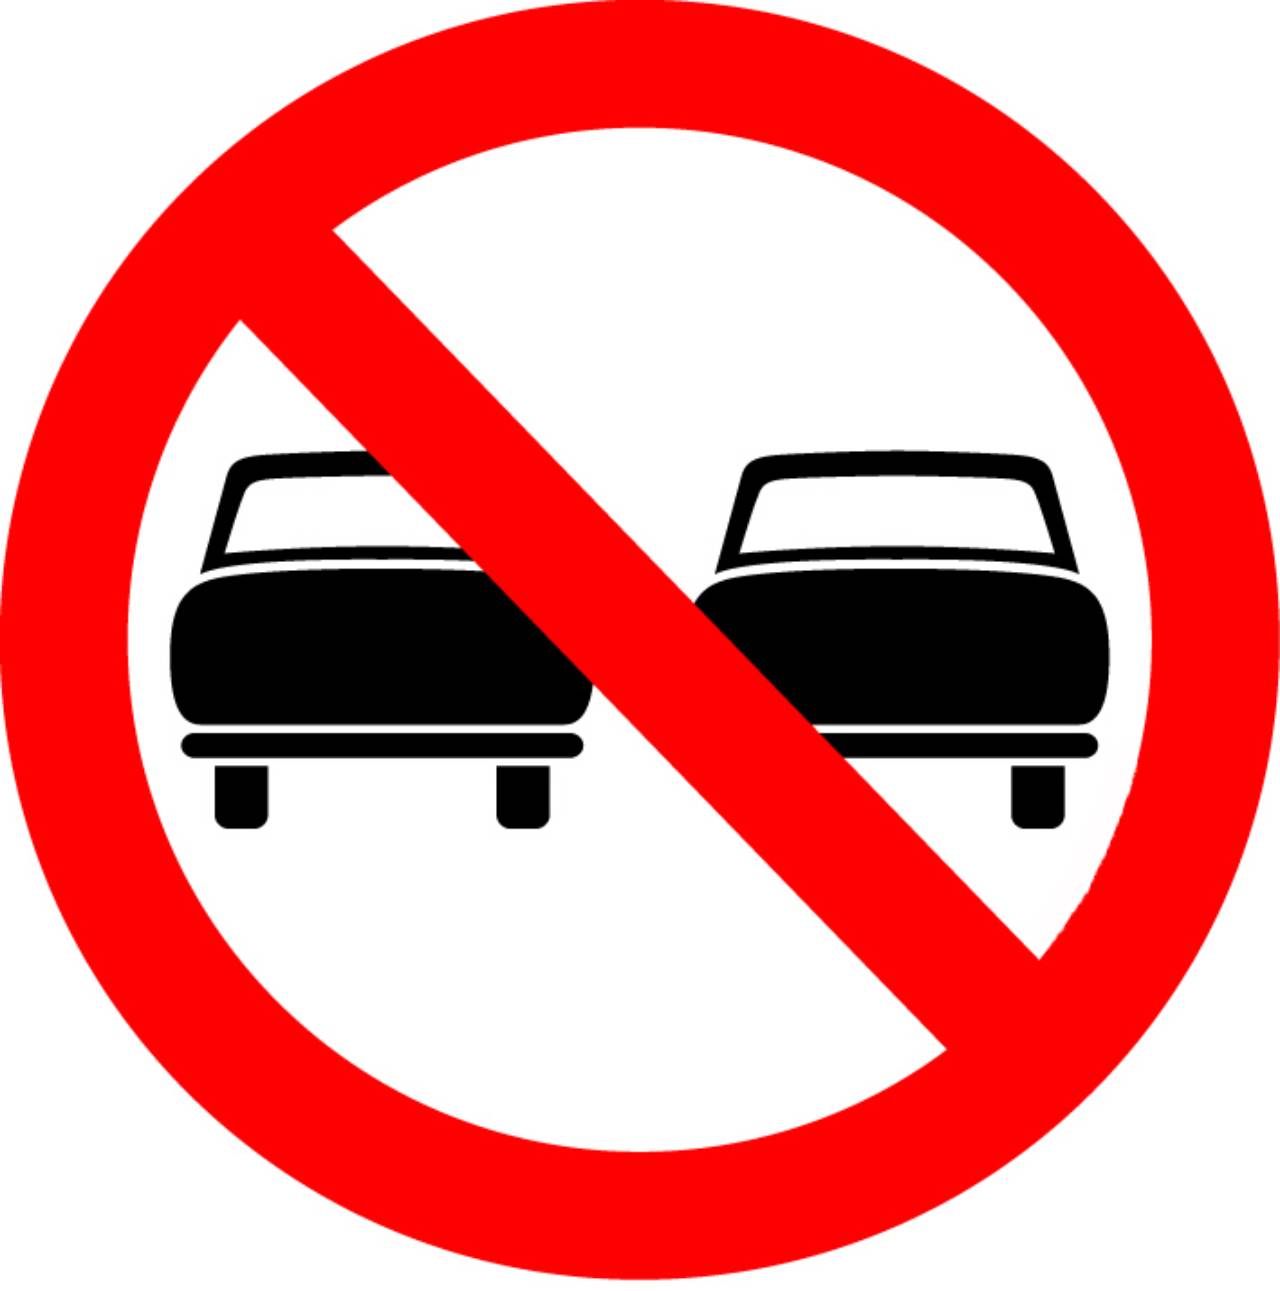 placa de trânsito - proibido ultrapassar